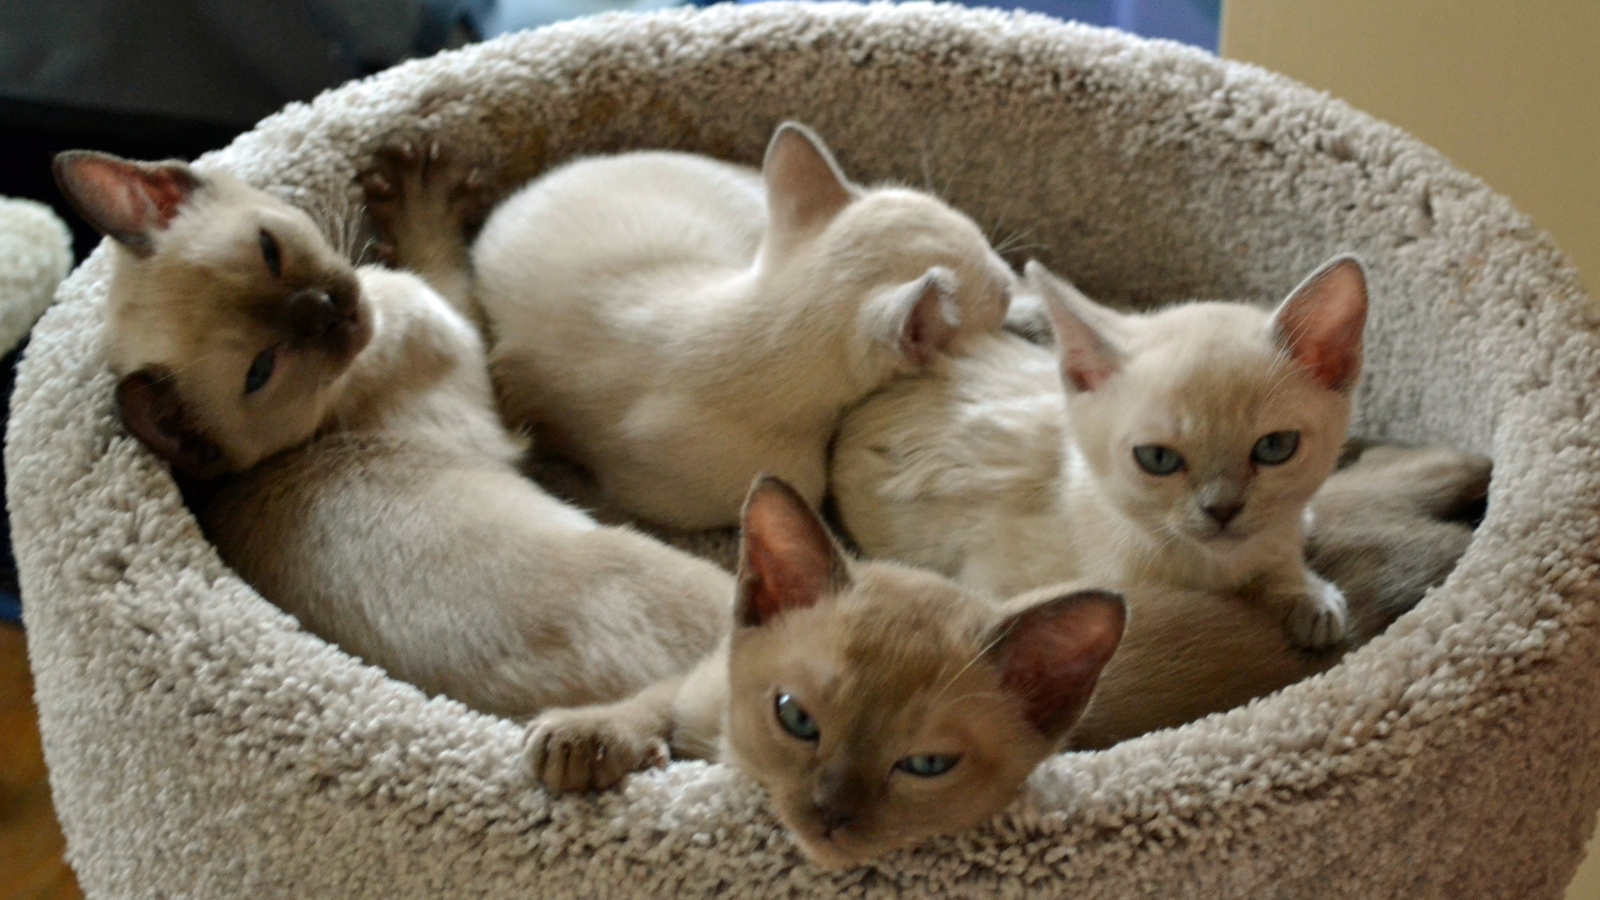 Котята тонкинской кошки в корзине